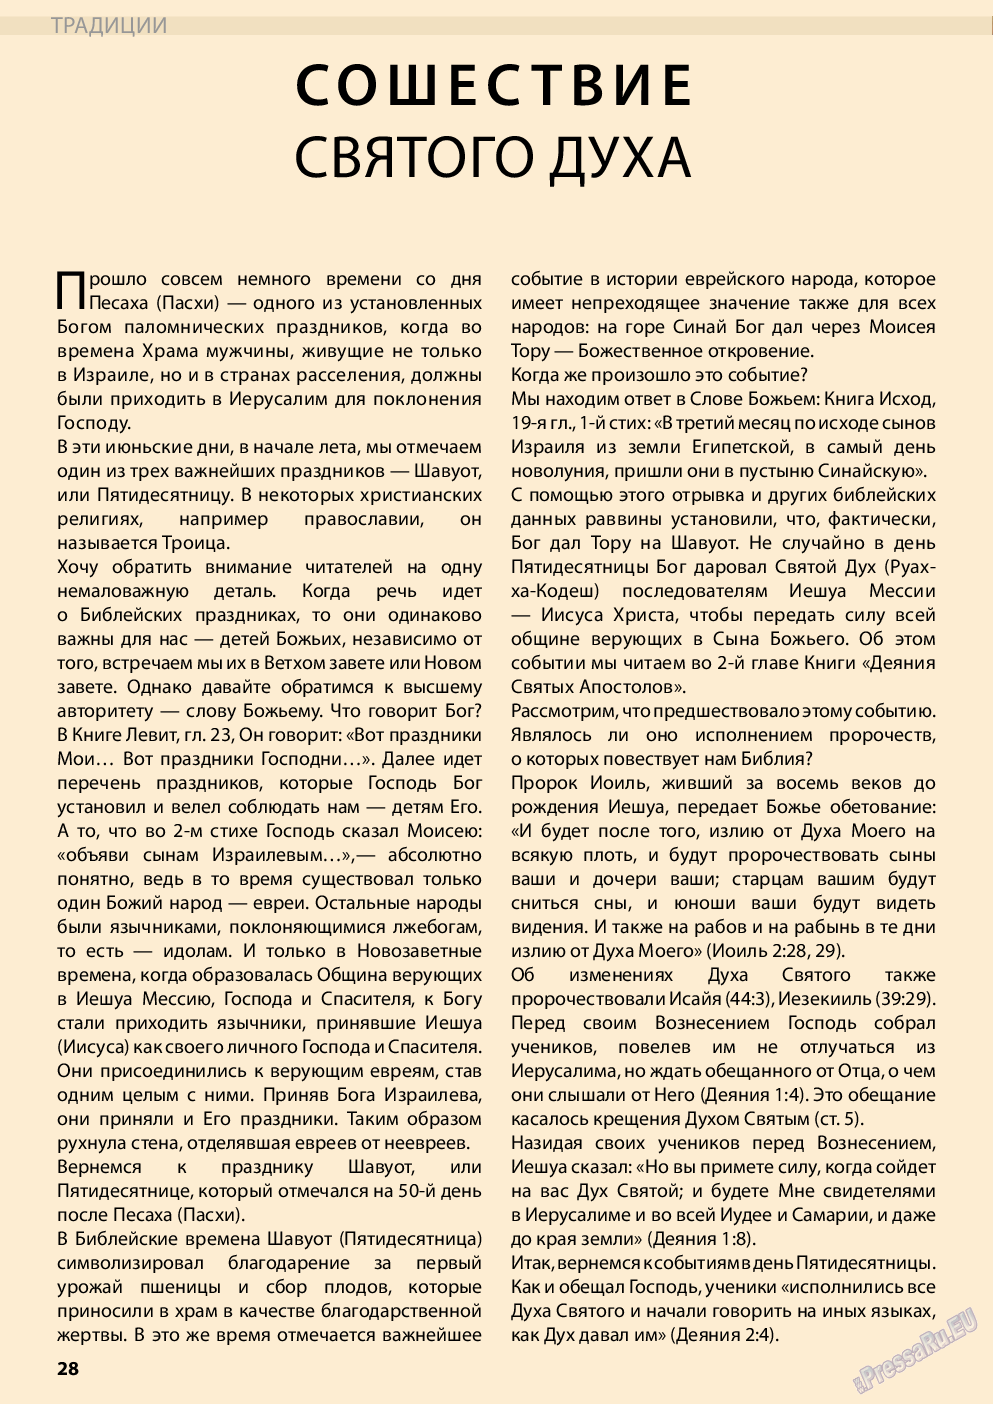 Wadim, журнал. 2014 №6 стр.28